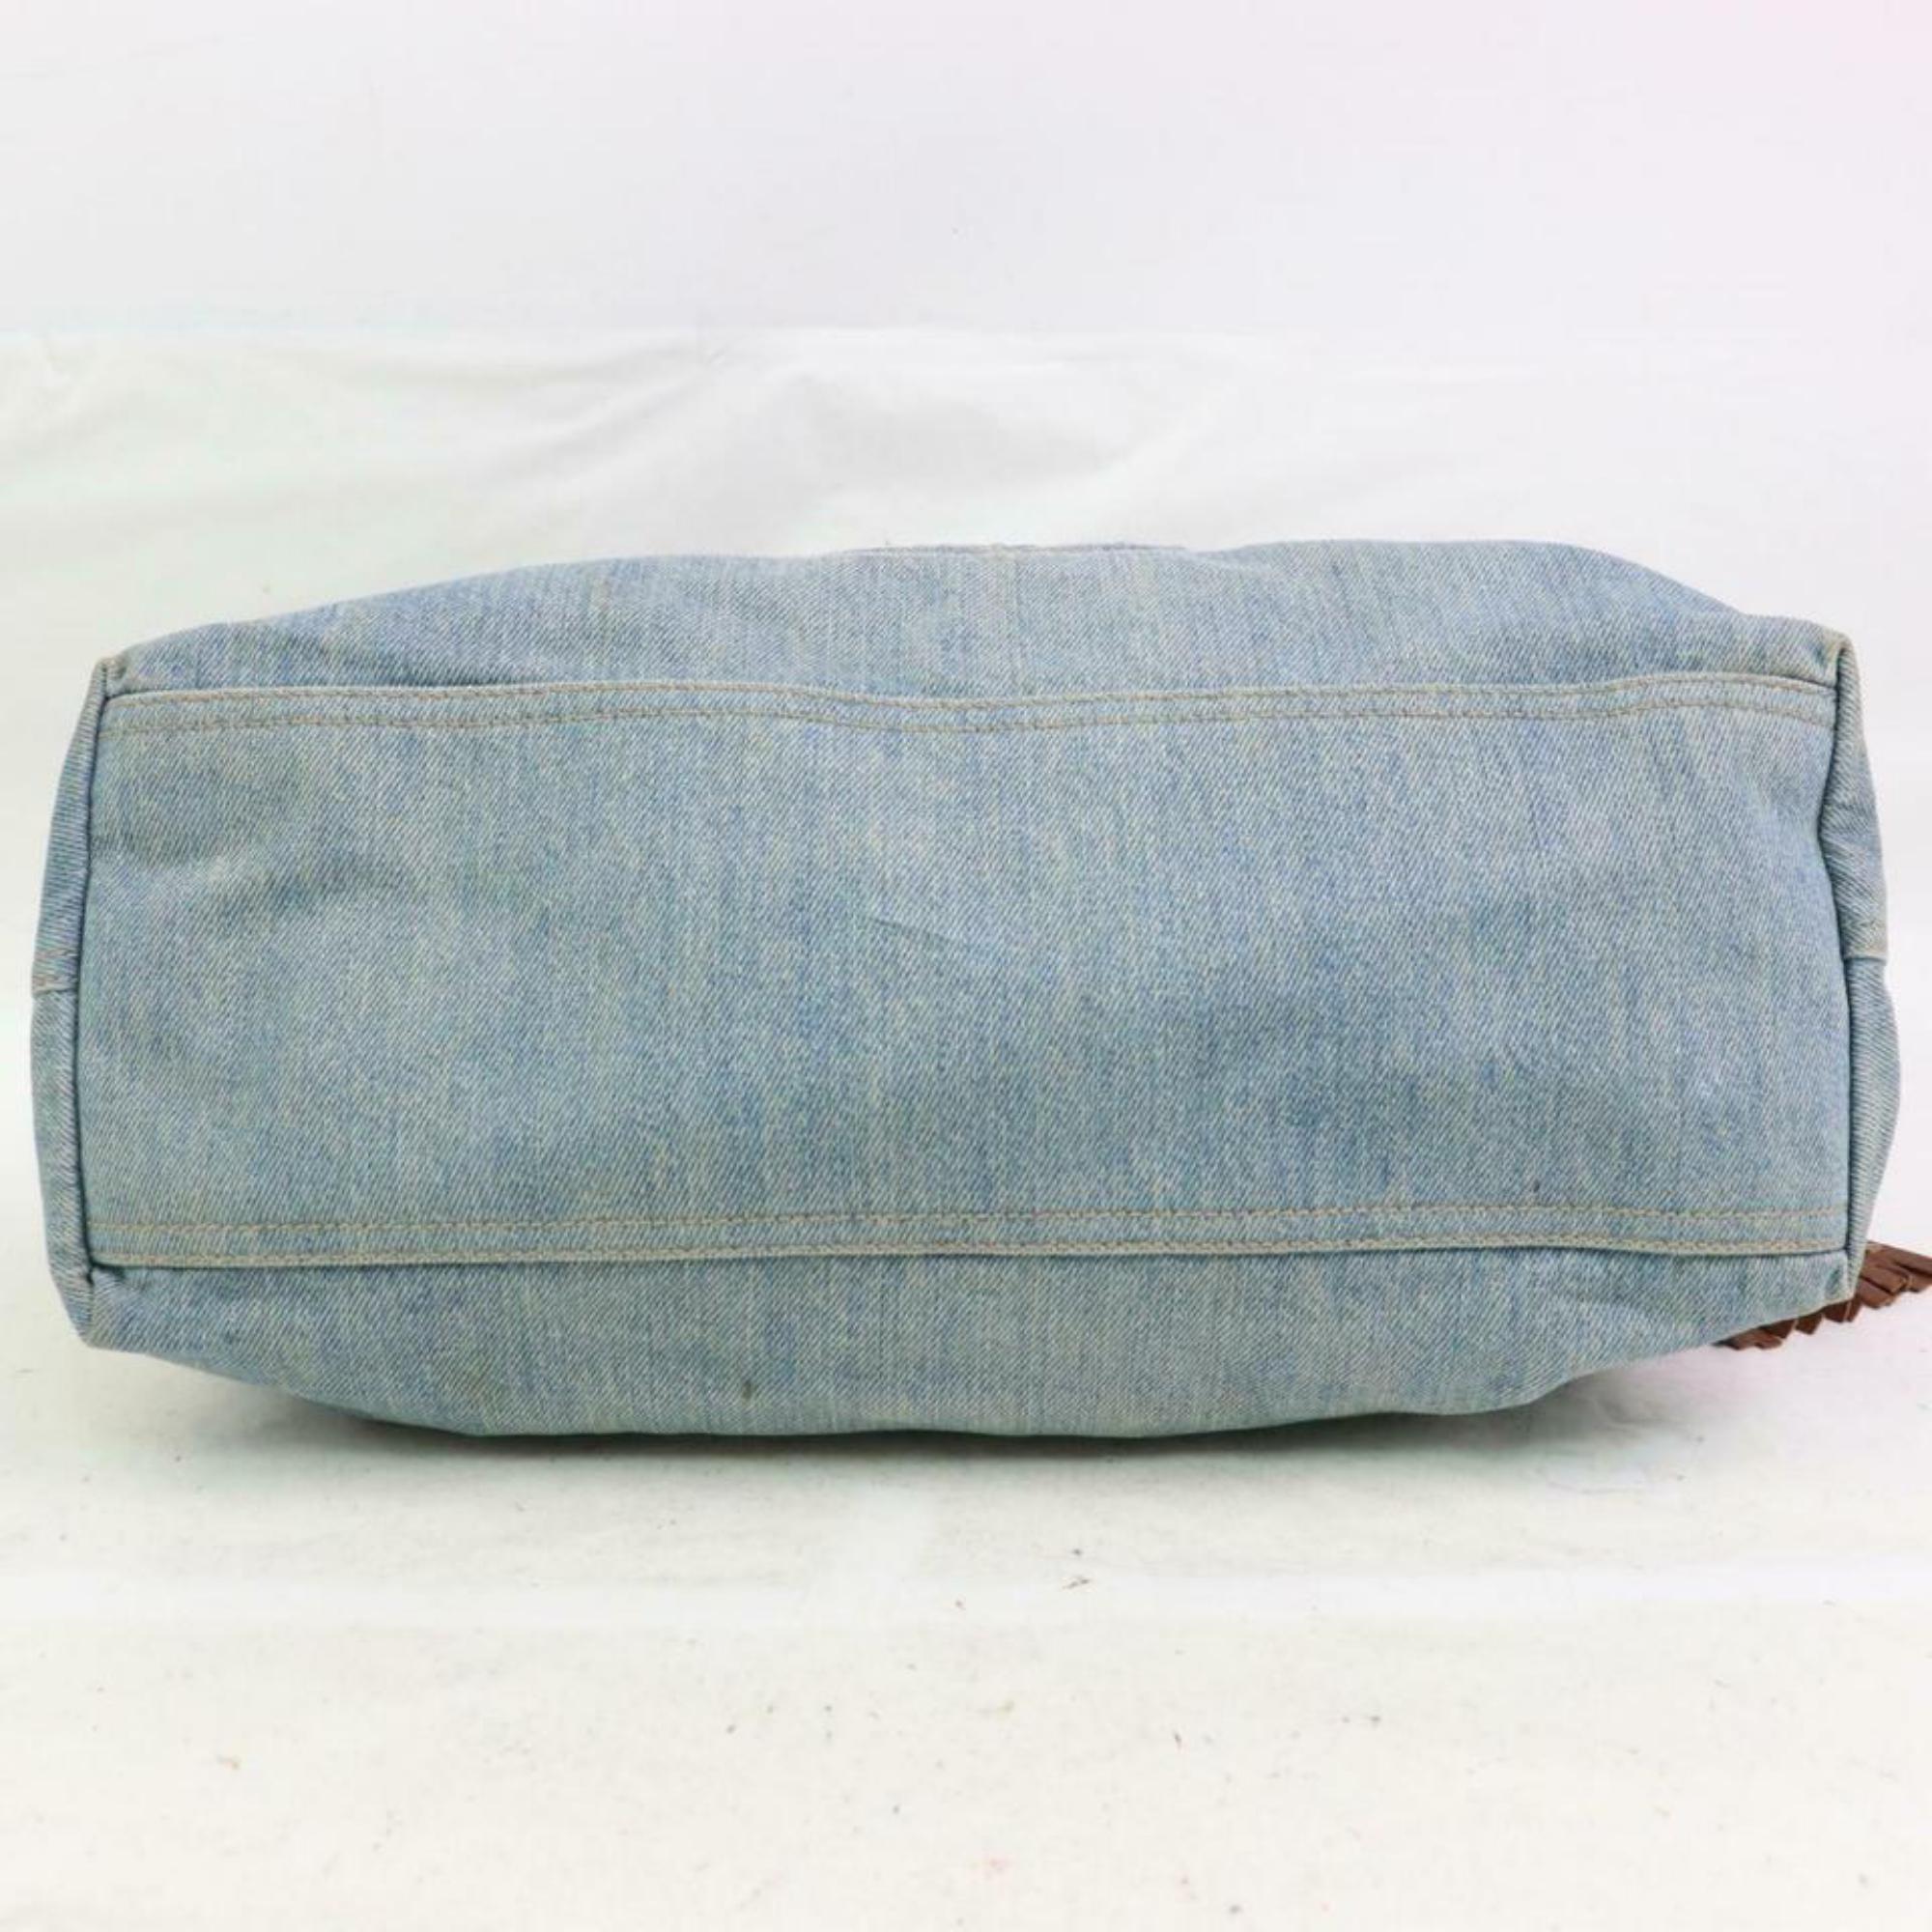 Gucci Soho Fringe Tassel Chain Tote 870373 Blue Denim Shoulder Bag In Good Condition For Sale In Forest Hills, NY